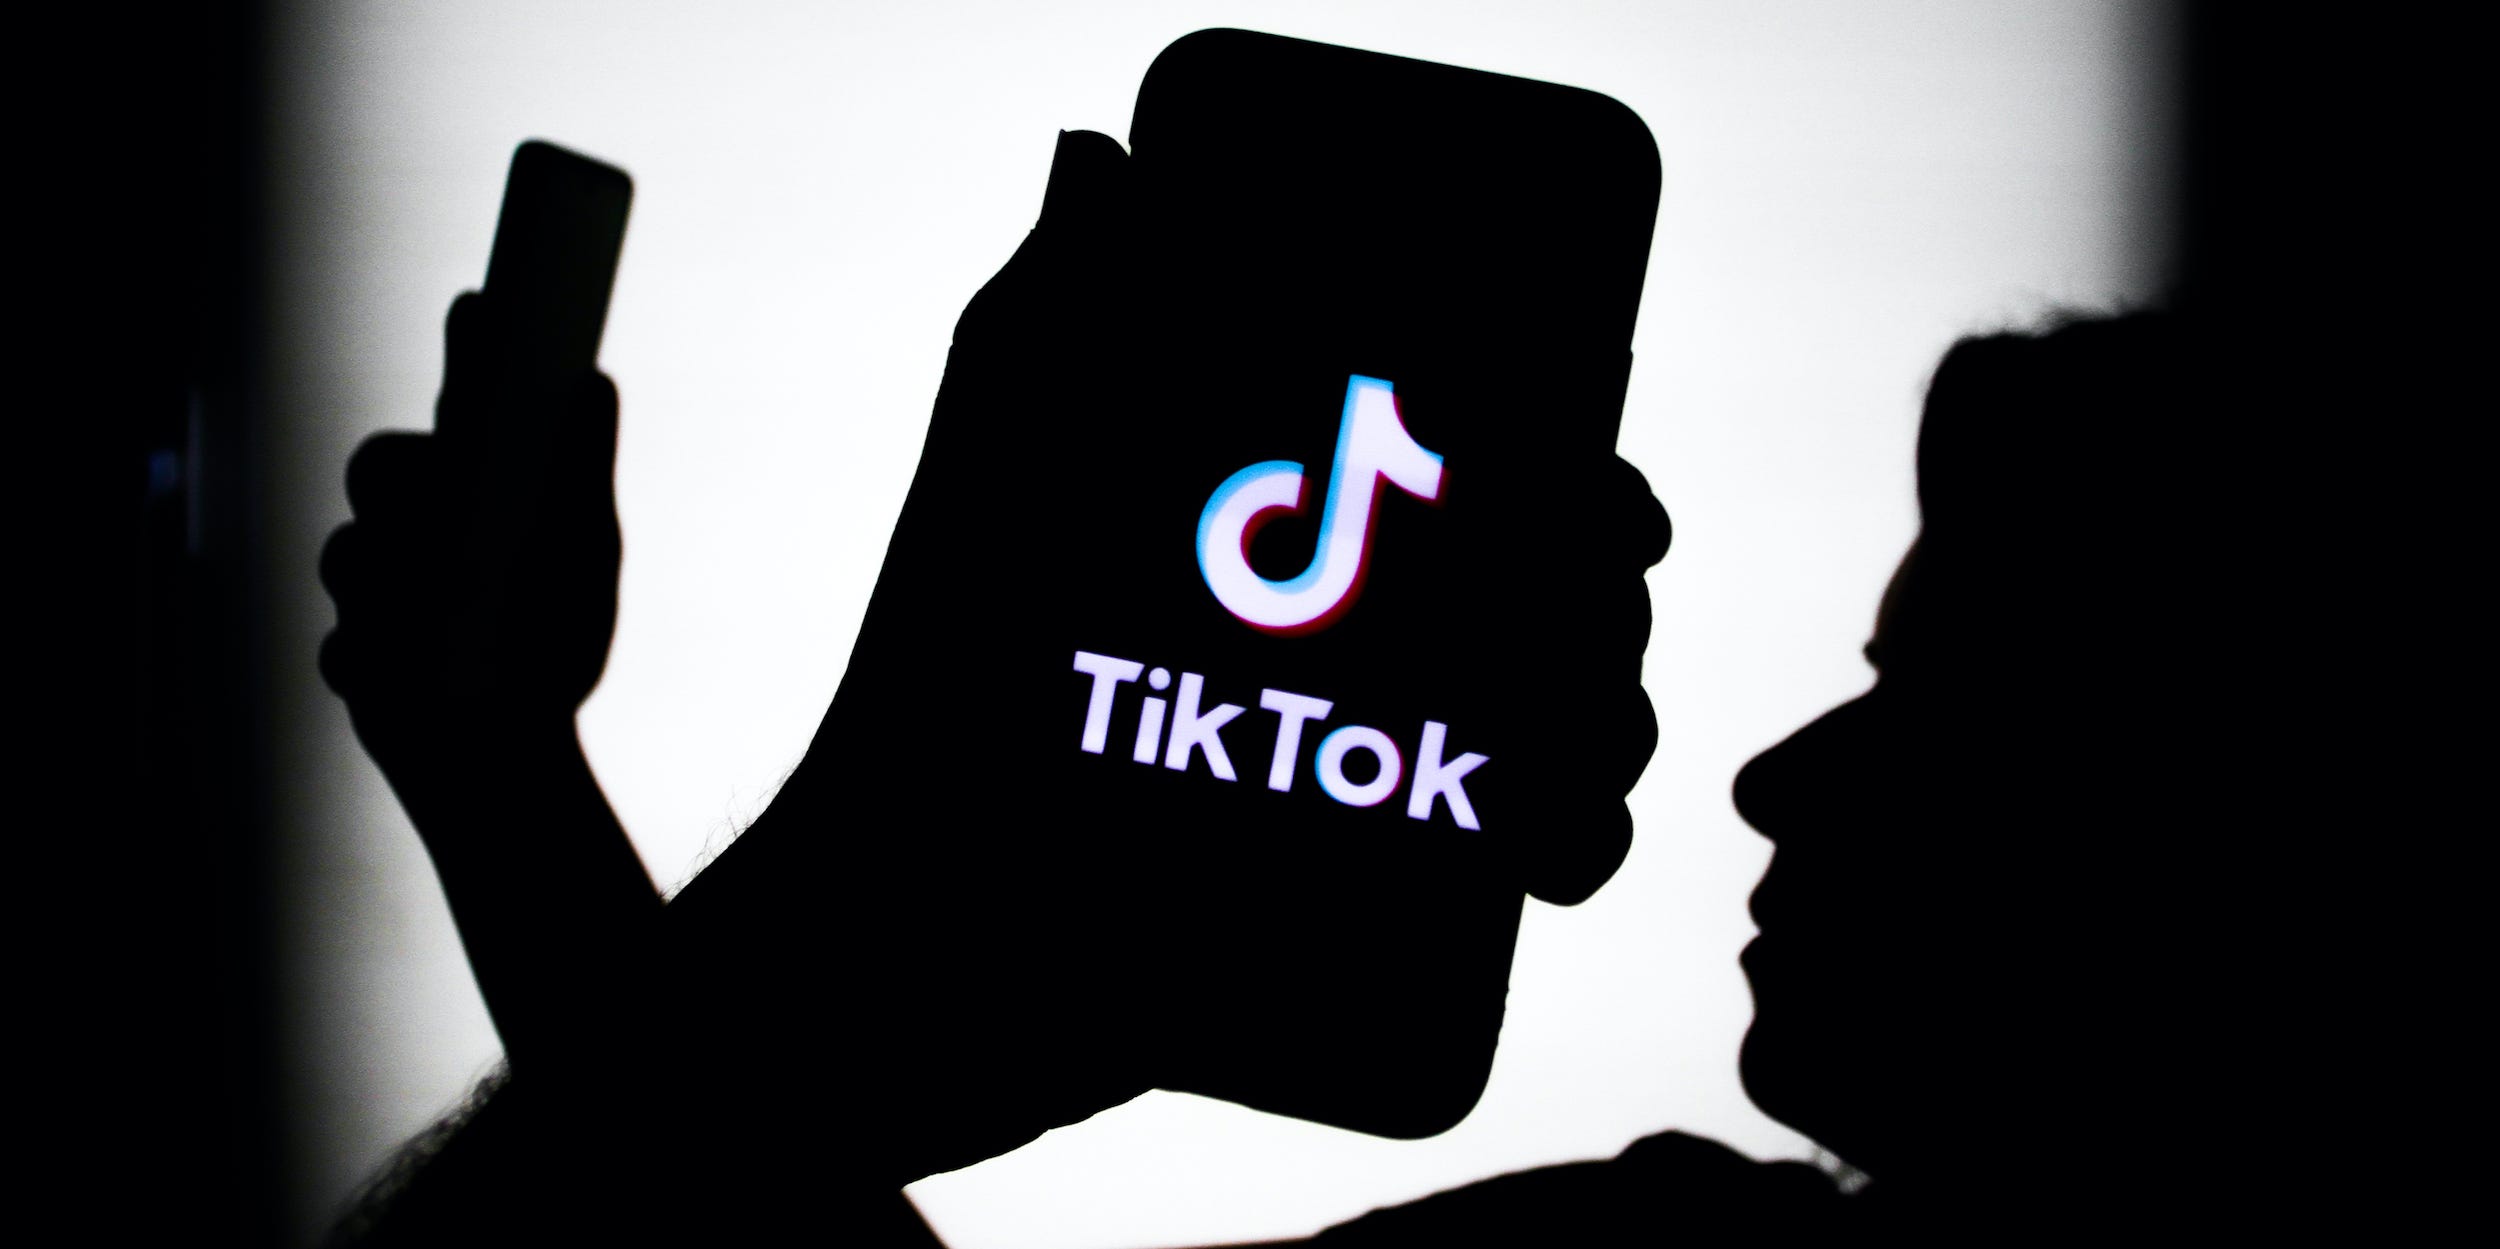 silhouettes of people looking at TikTok on phones